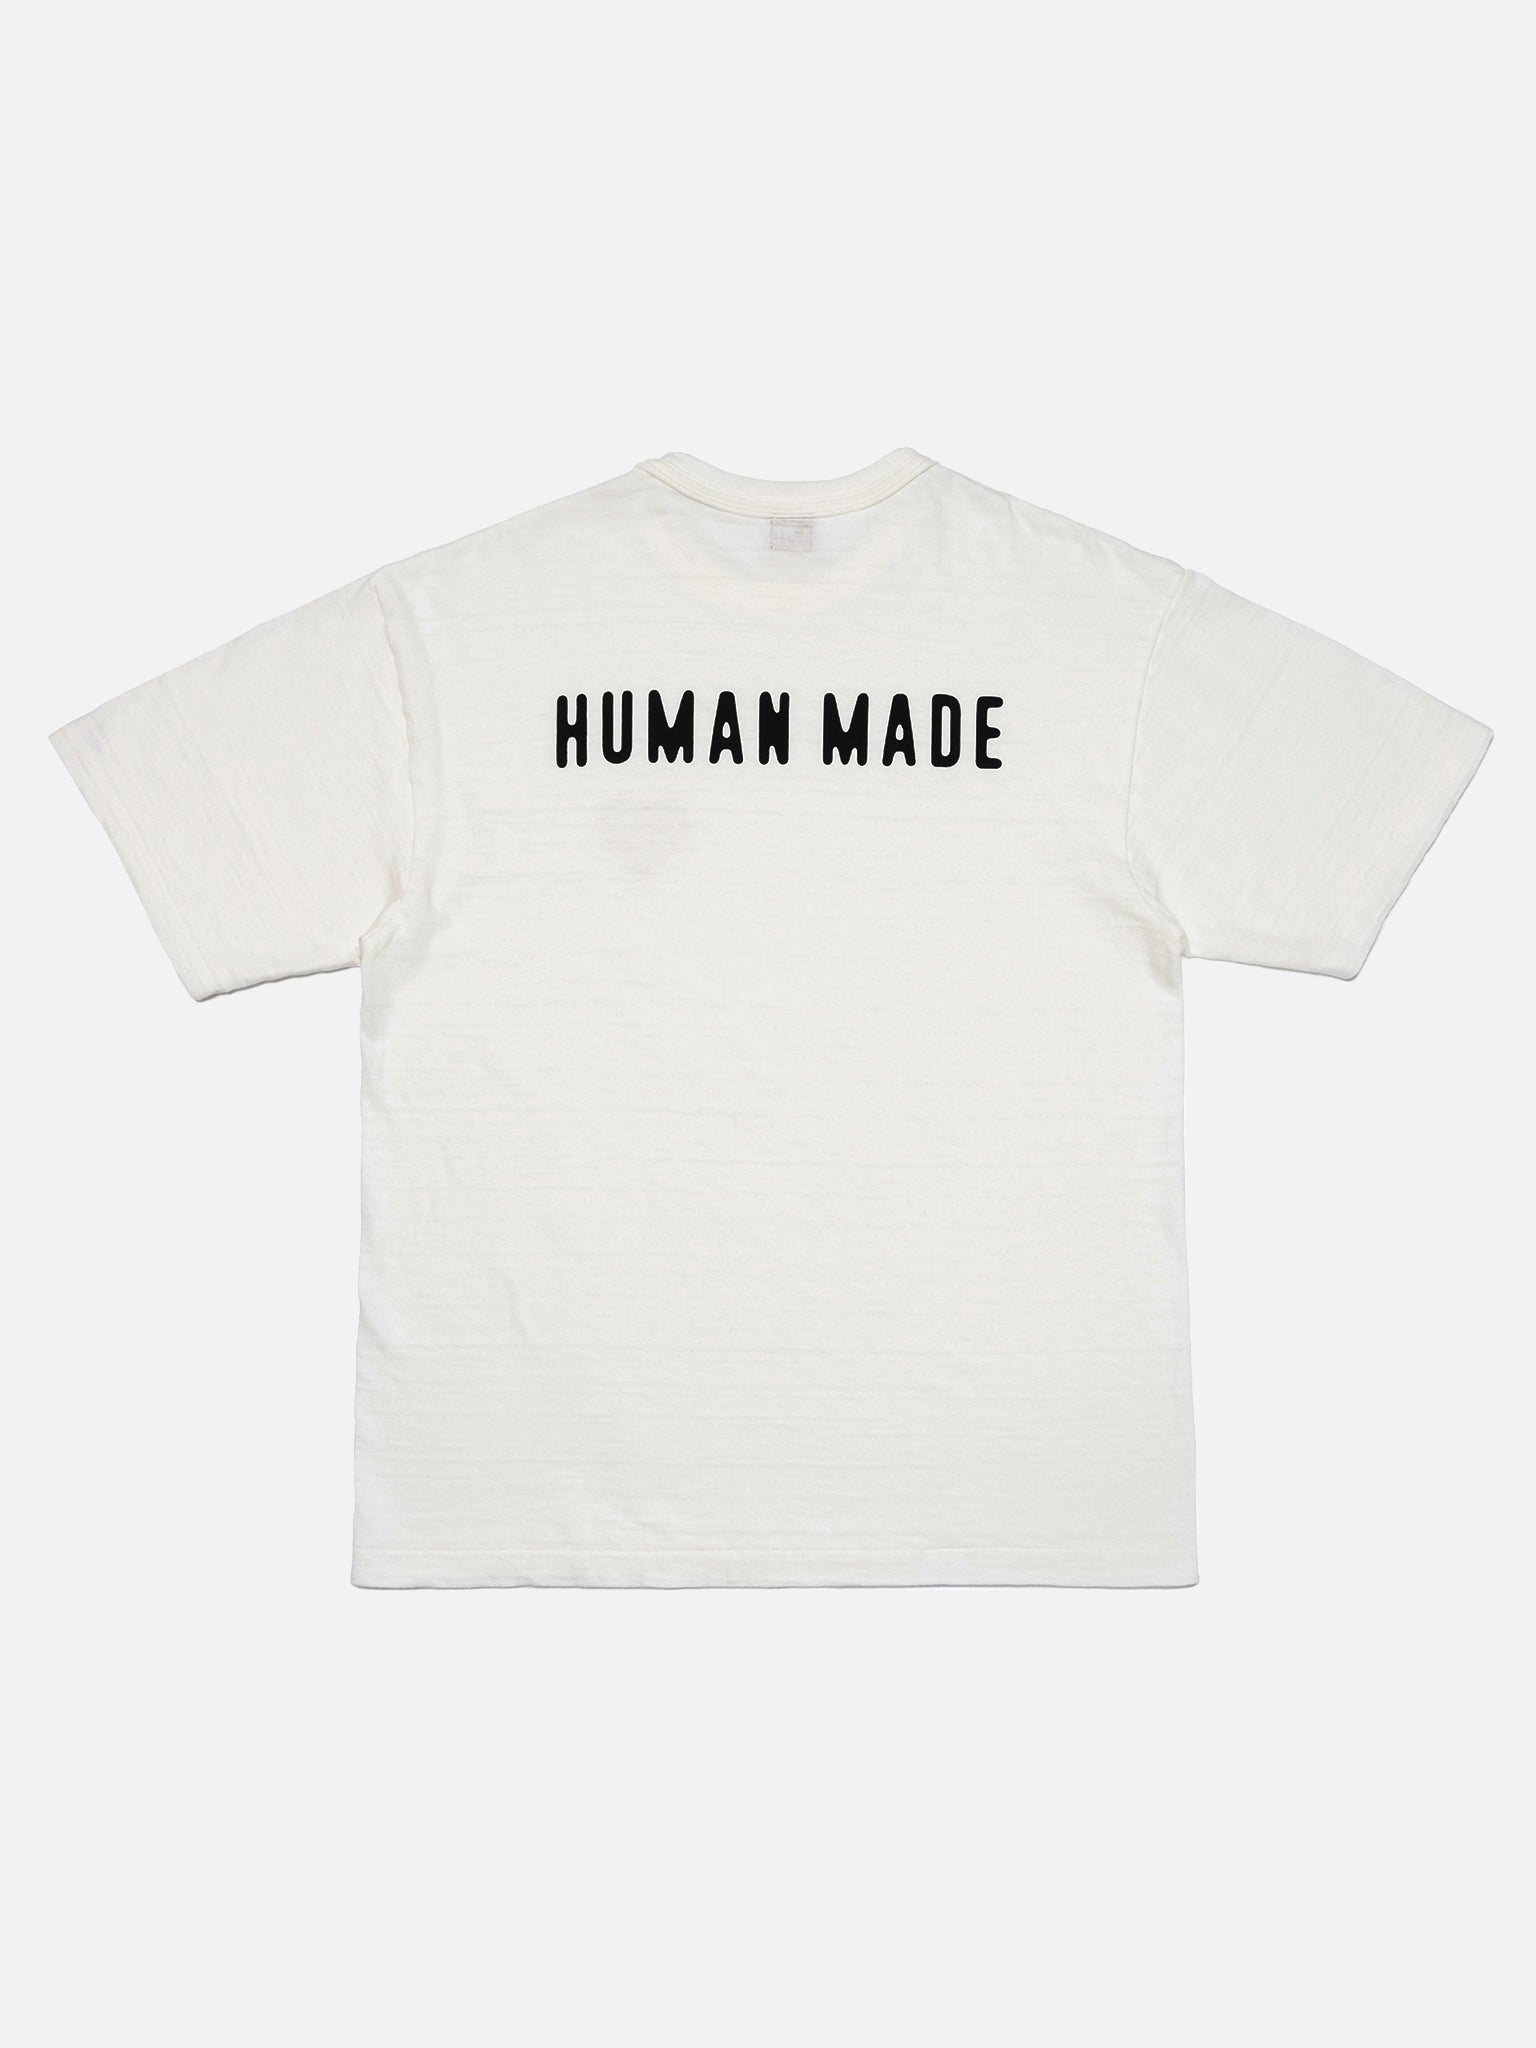 Human Made Graphic T-Shirt #11